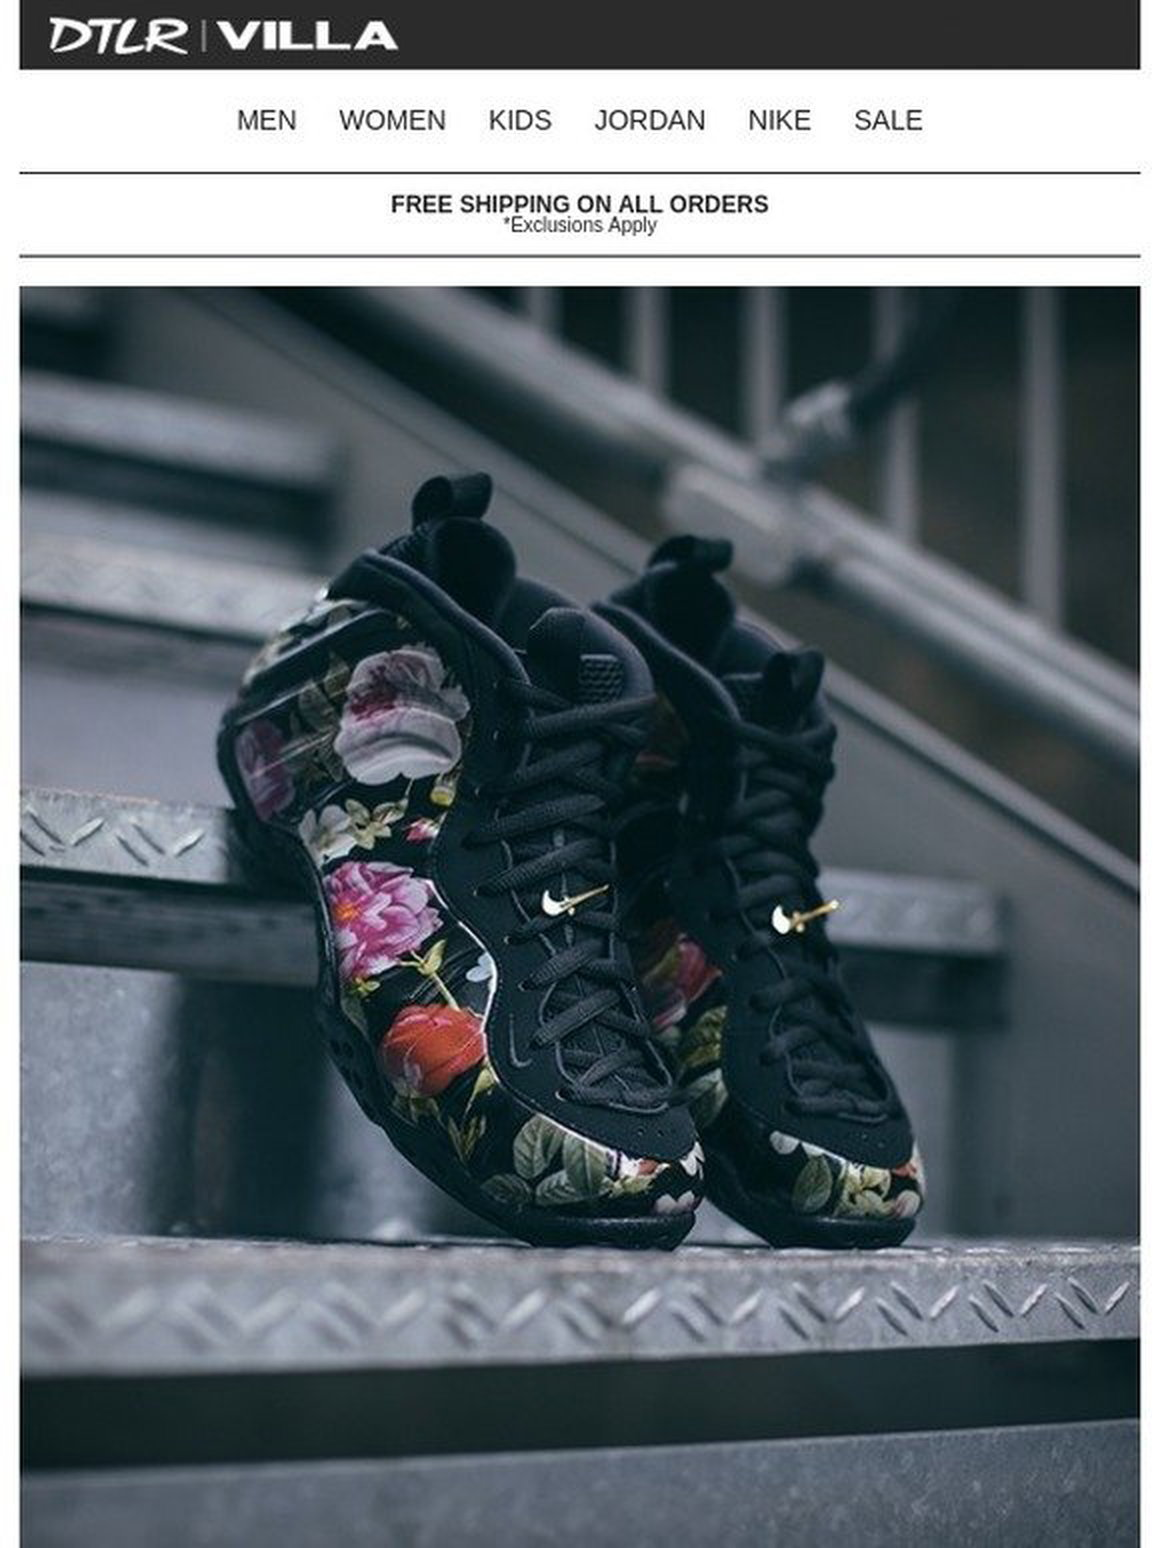 villa shoes website